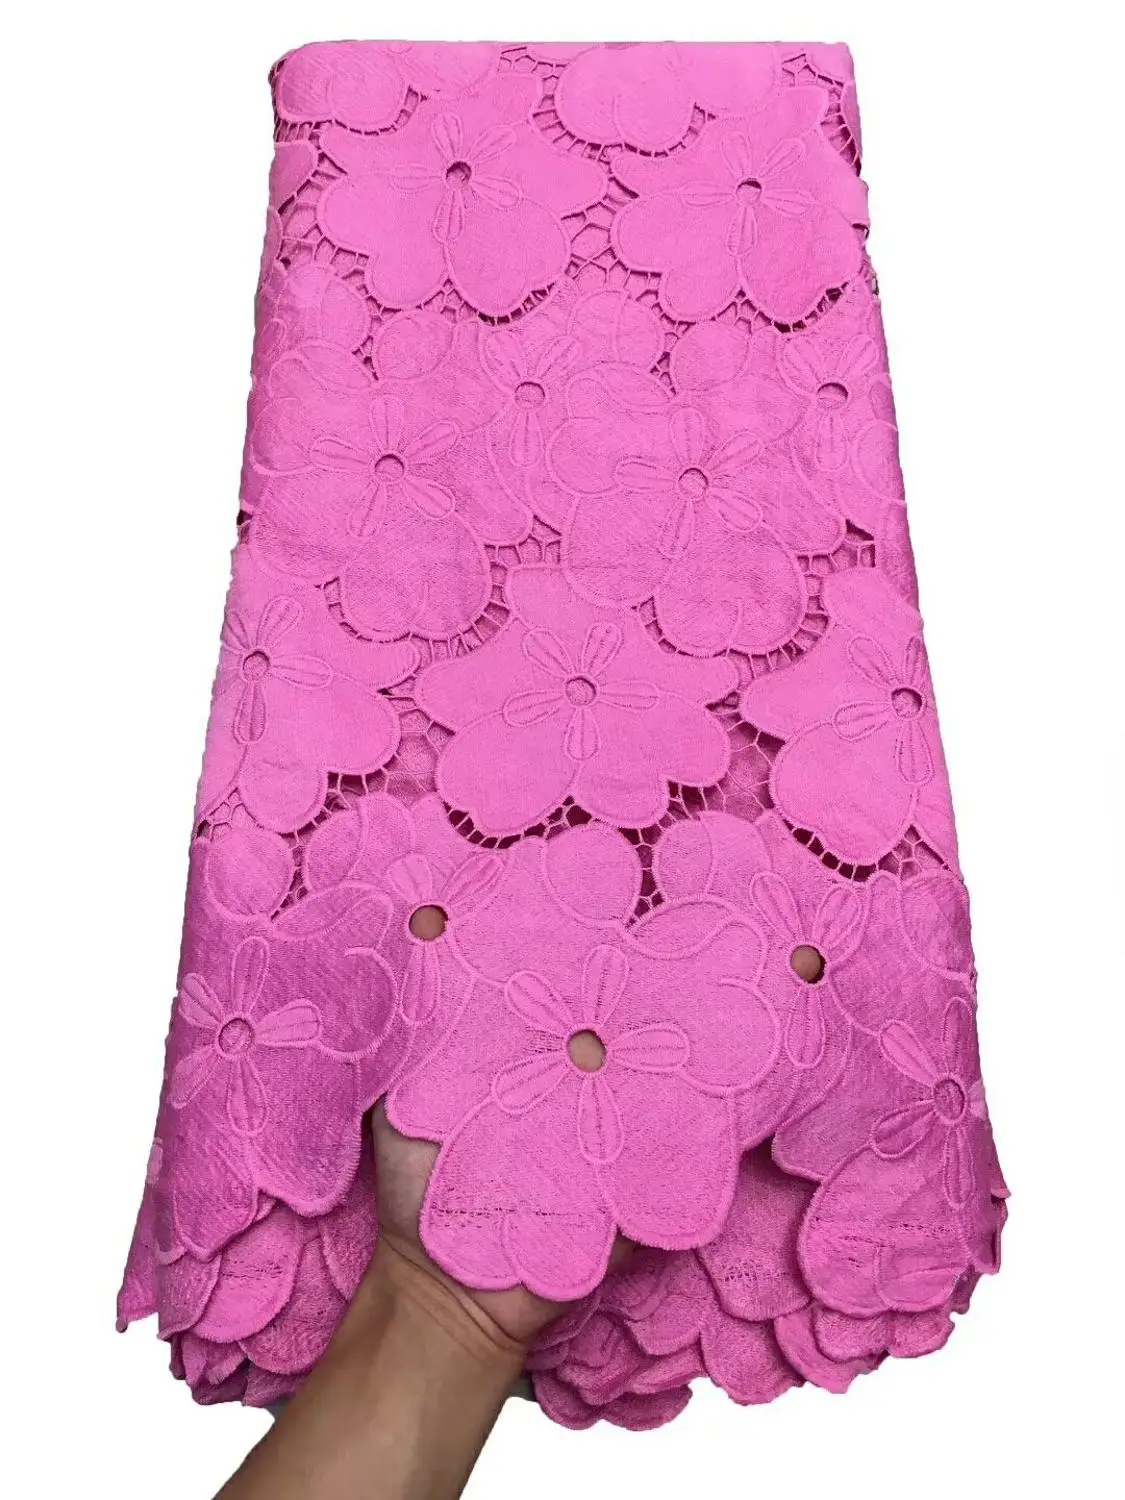 Горячая африканская кружевная ткань из нитей нигерийская кружевная ткань Высококачественная кружевная розовая французская кружевная ткань для свадьбы J18